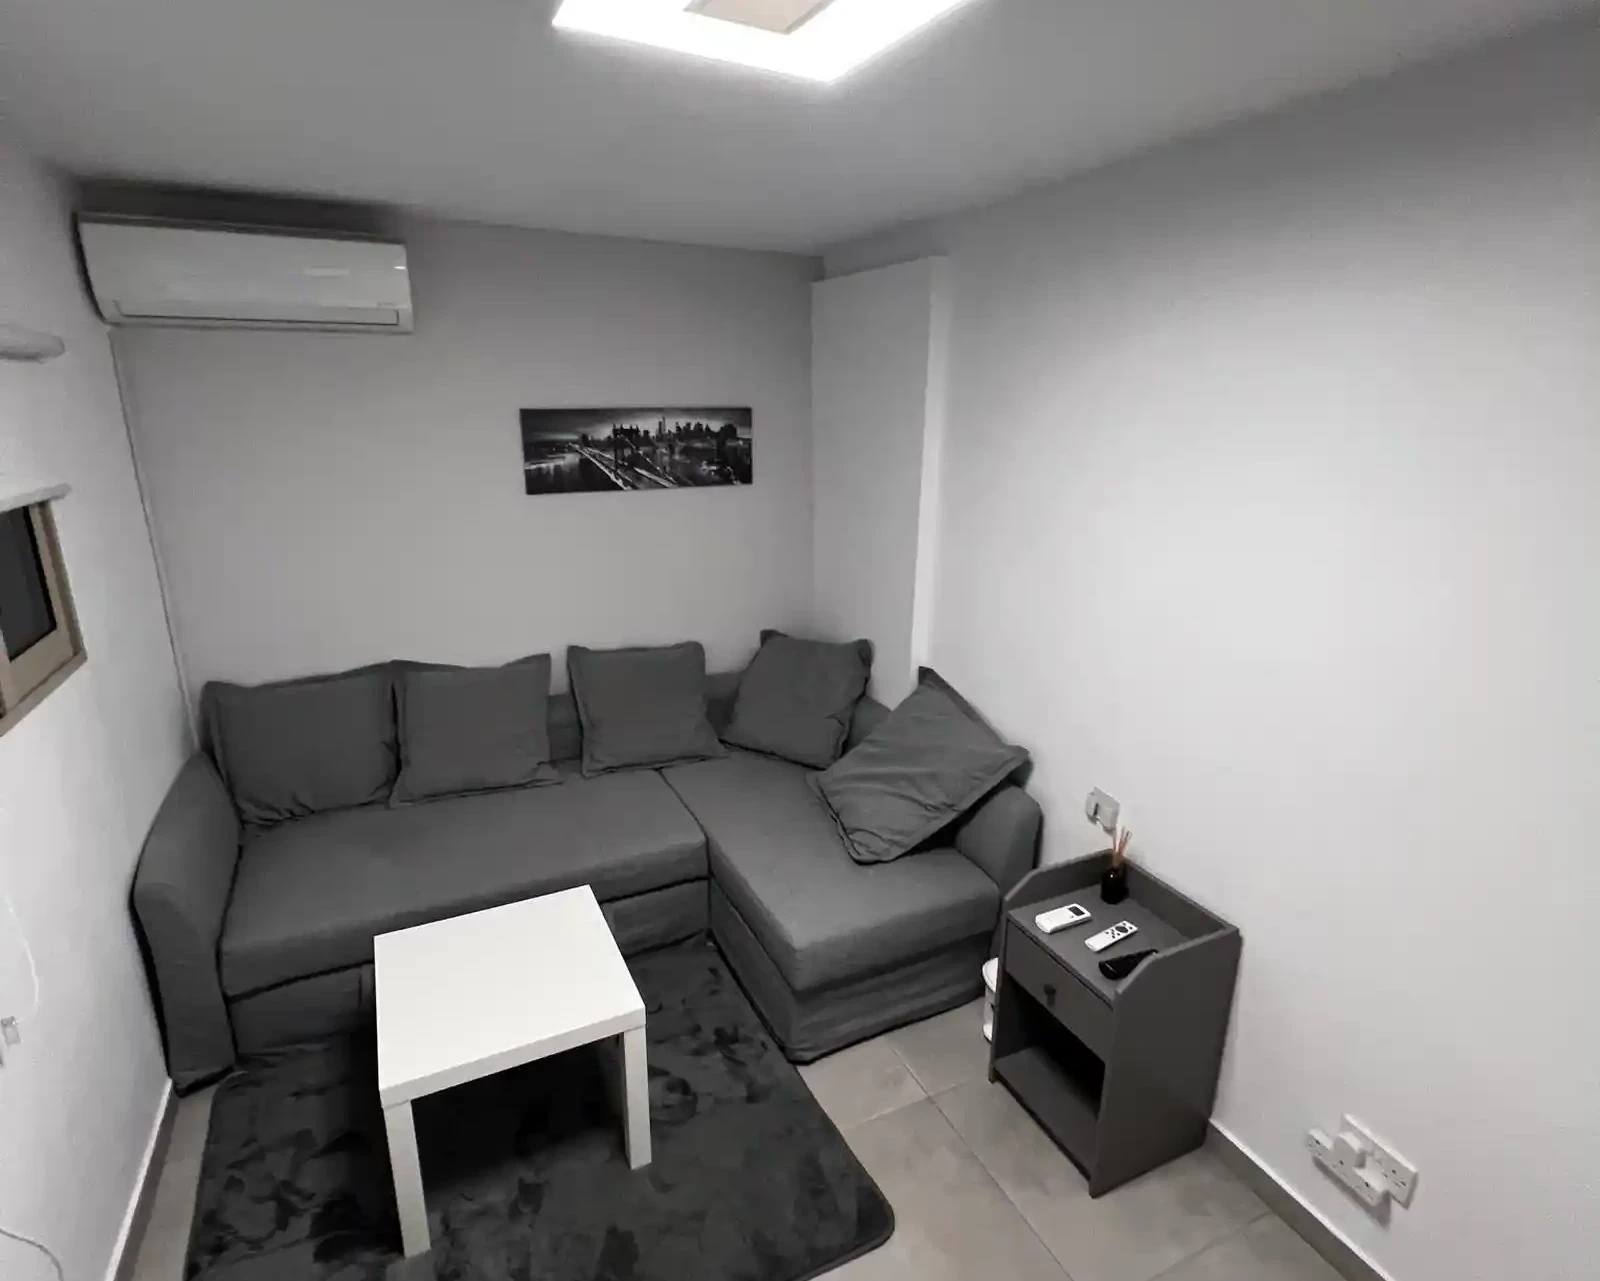 Studio apartment to rent €1.050, image 1